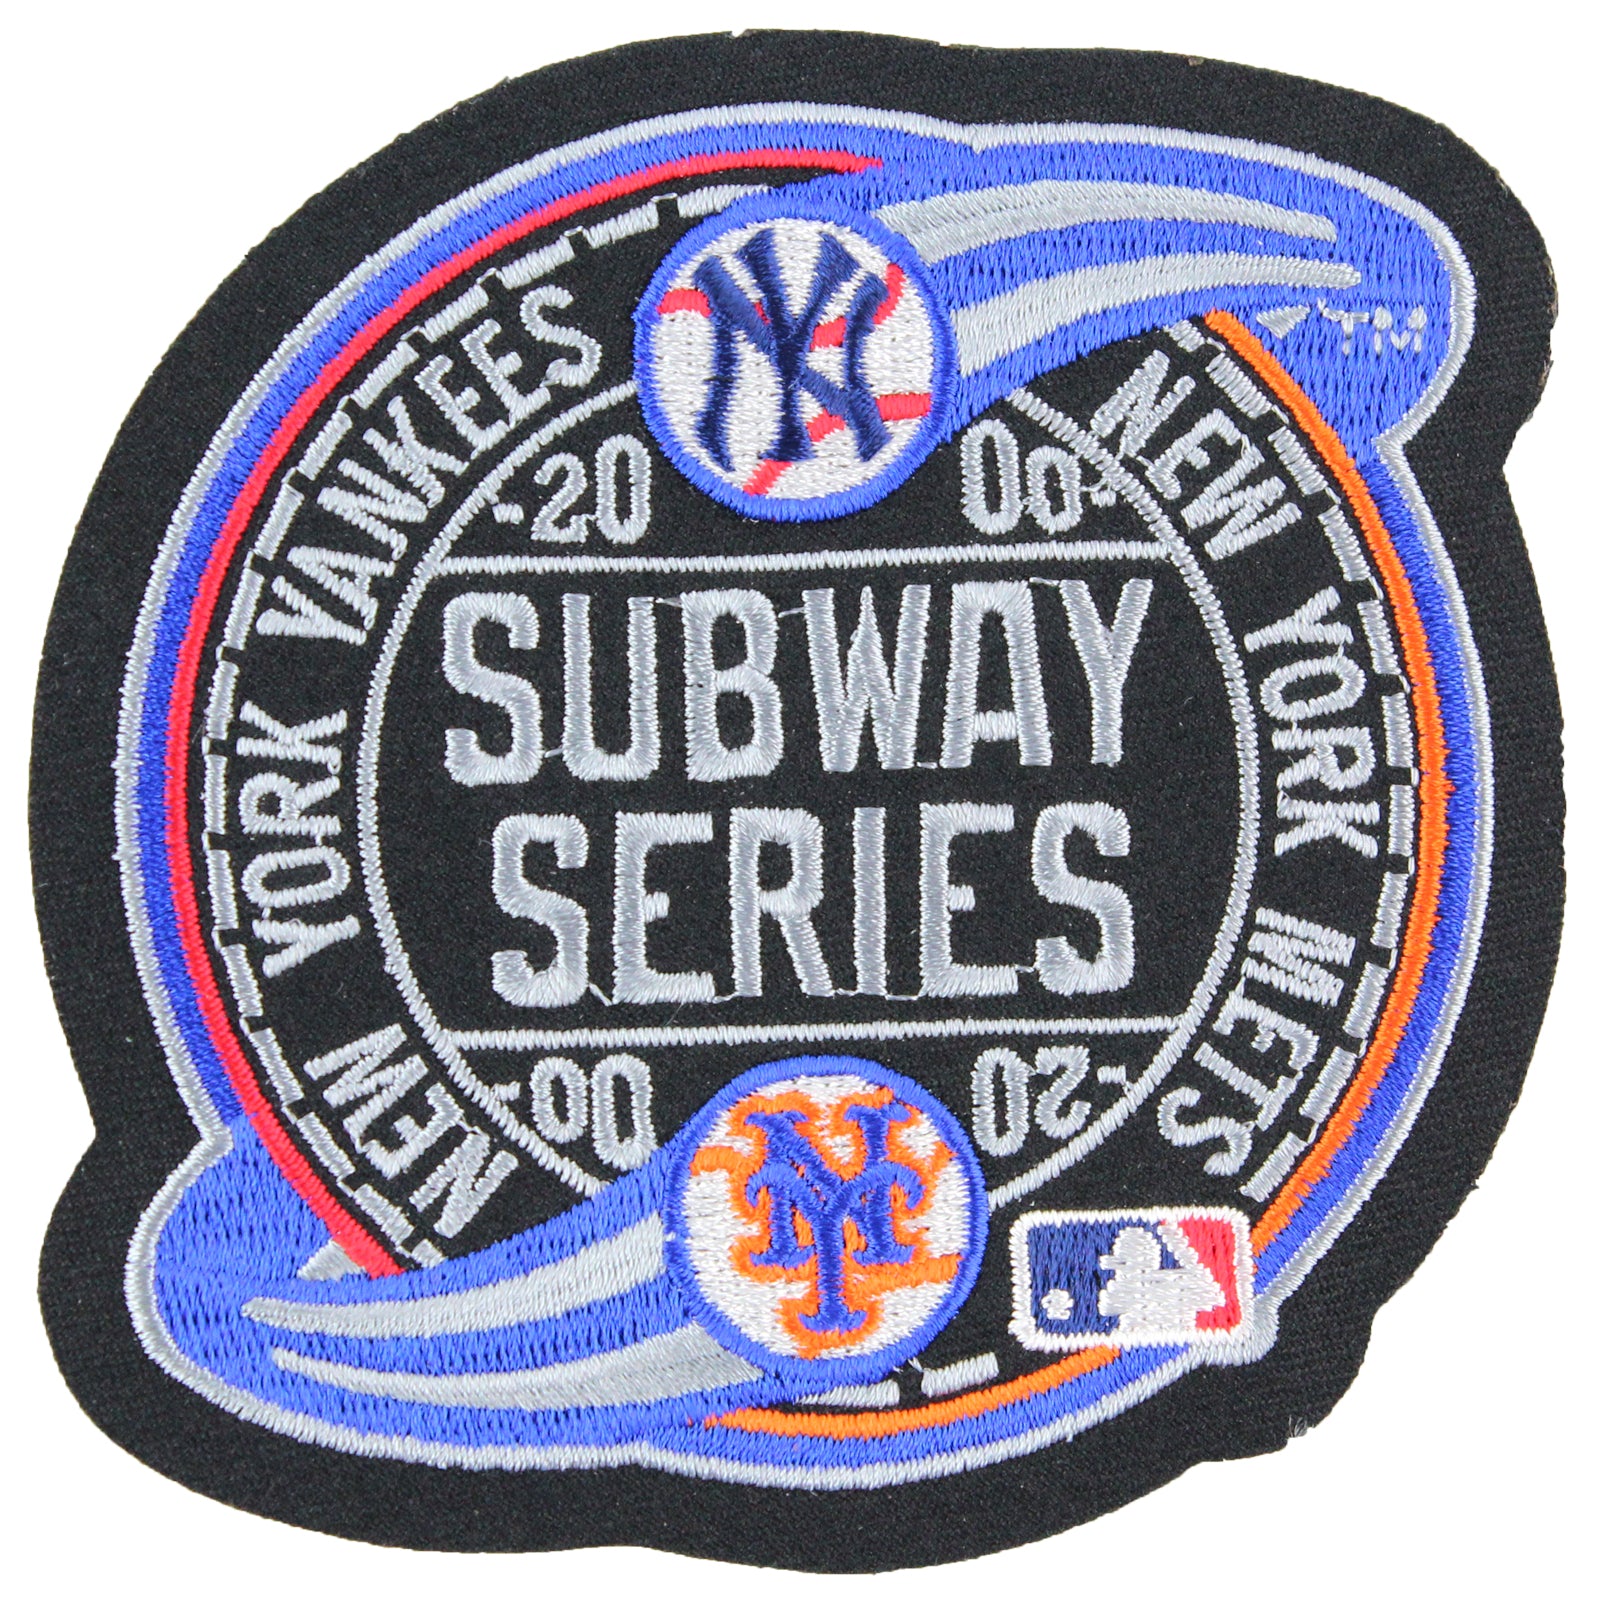 Official new York Yankees New York Mets New Era Mlb 00 Subway